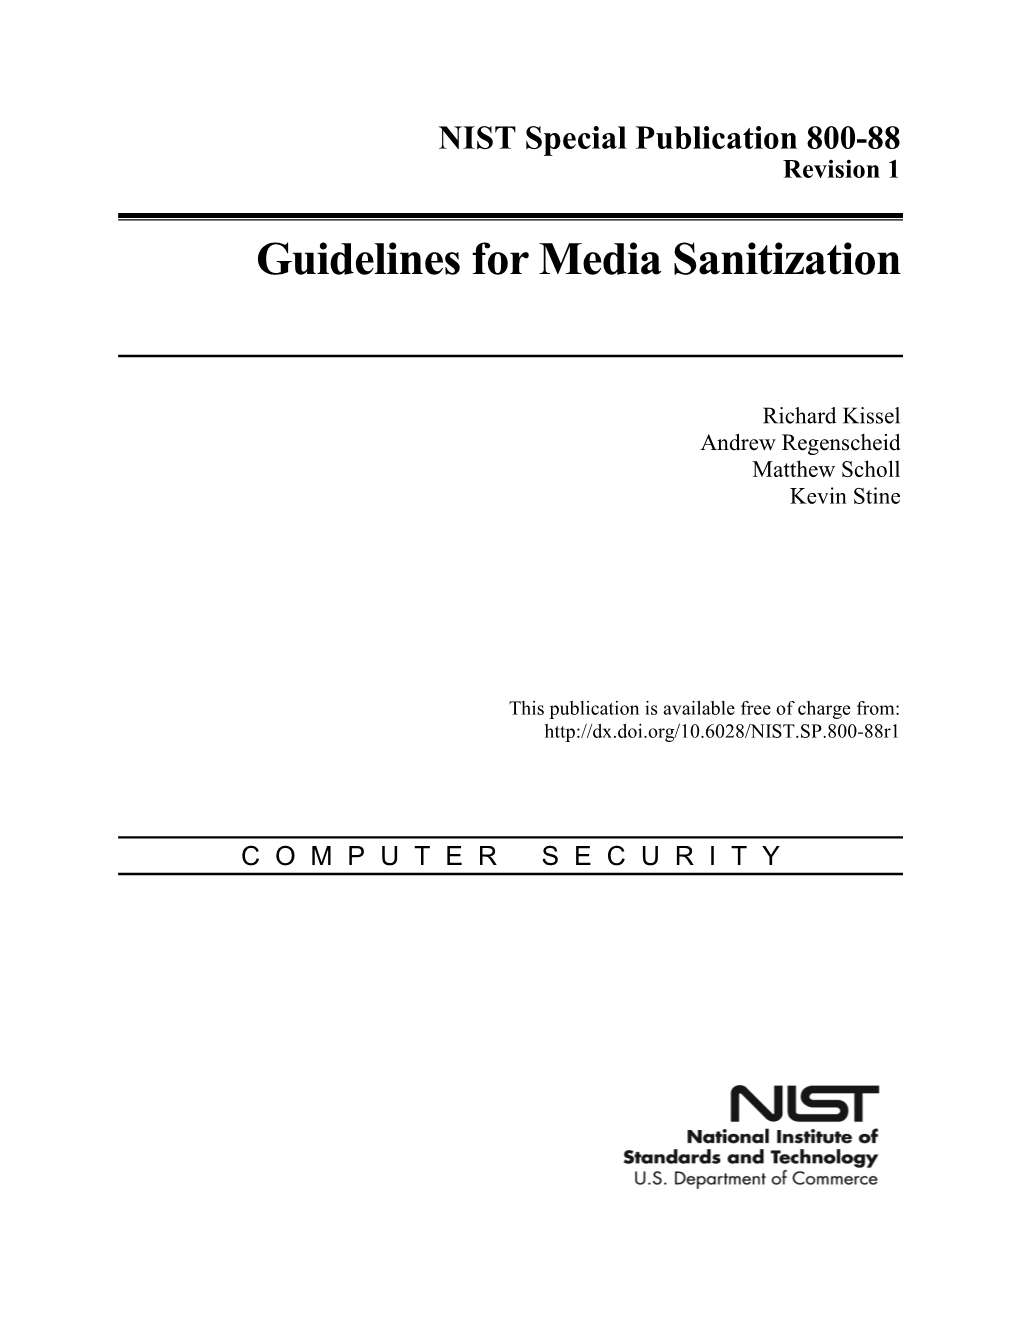 Guidelines for Media Sanitization